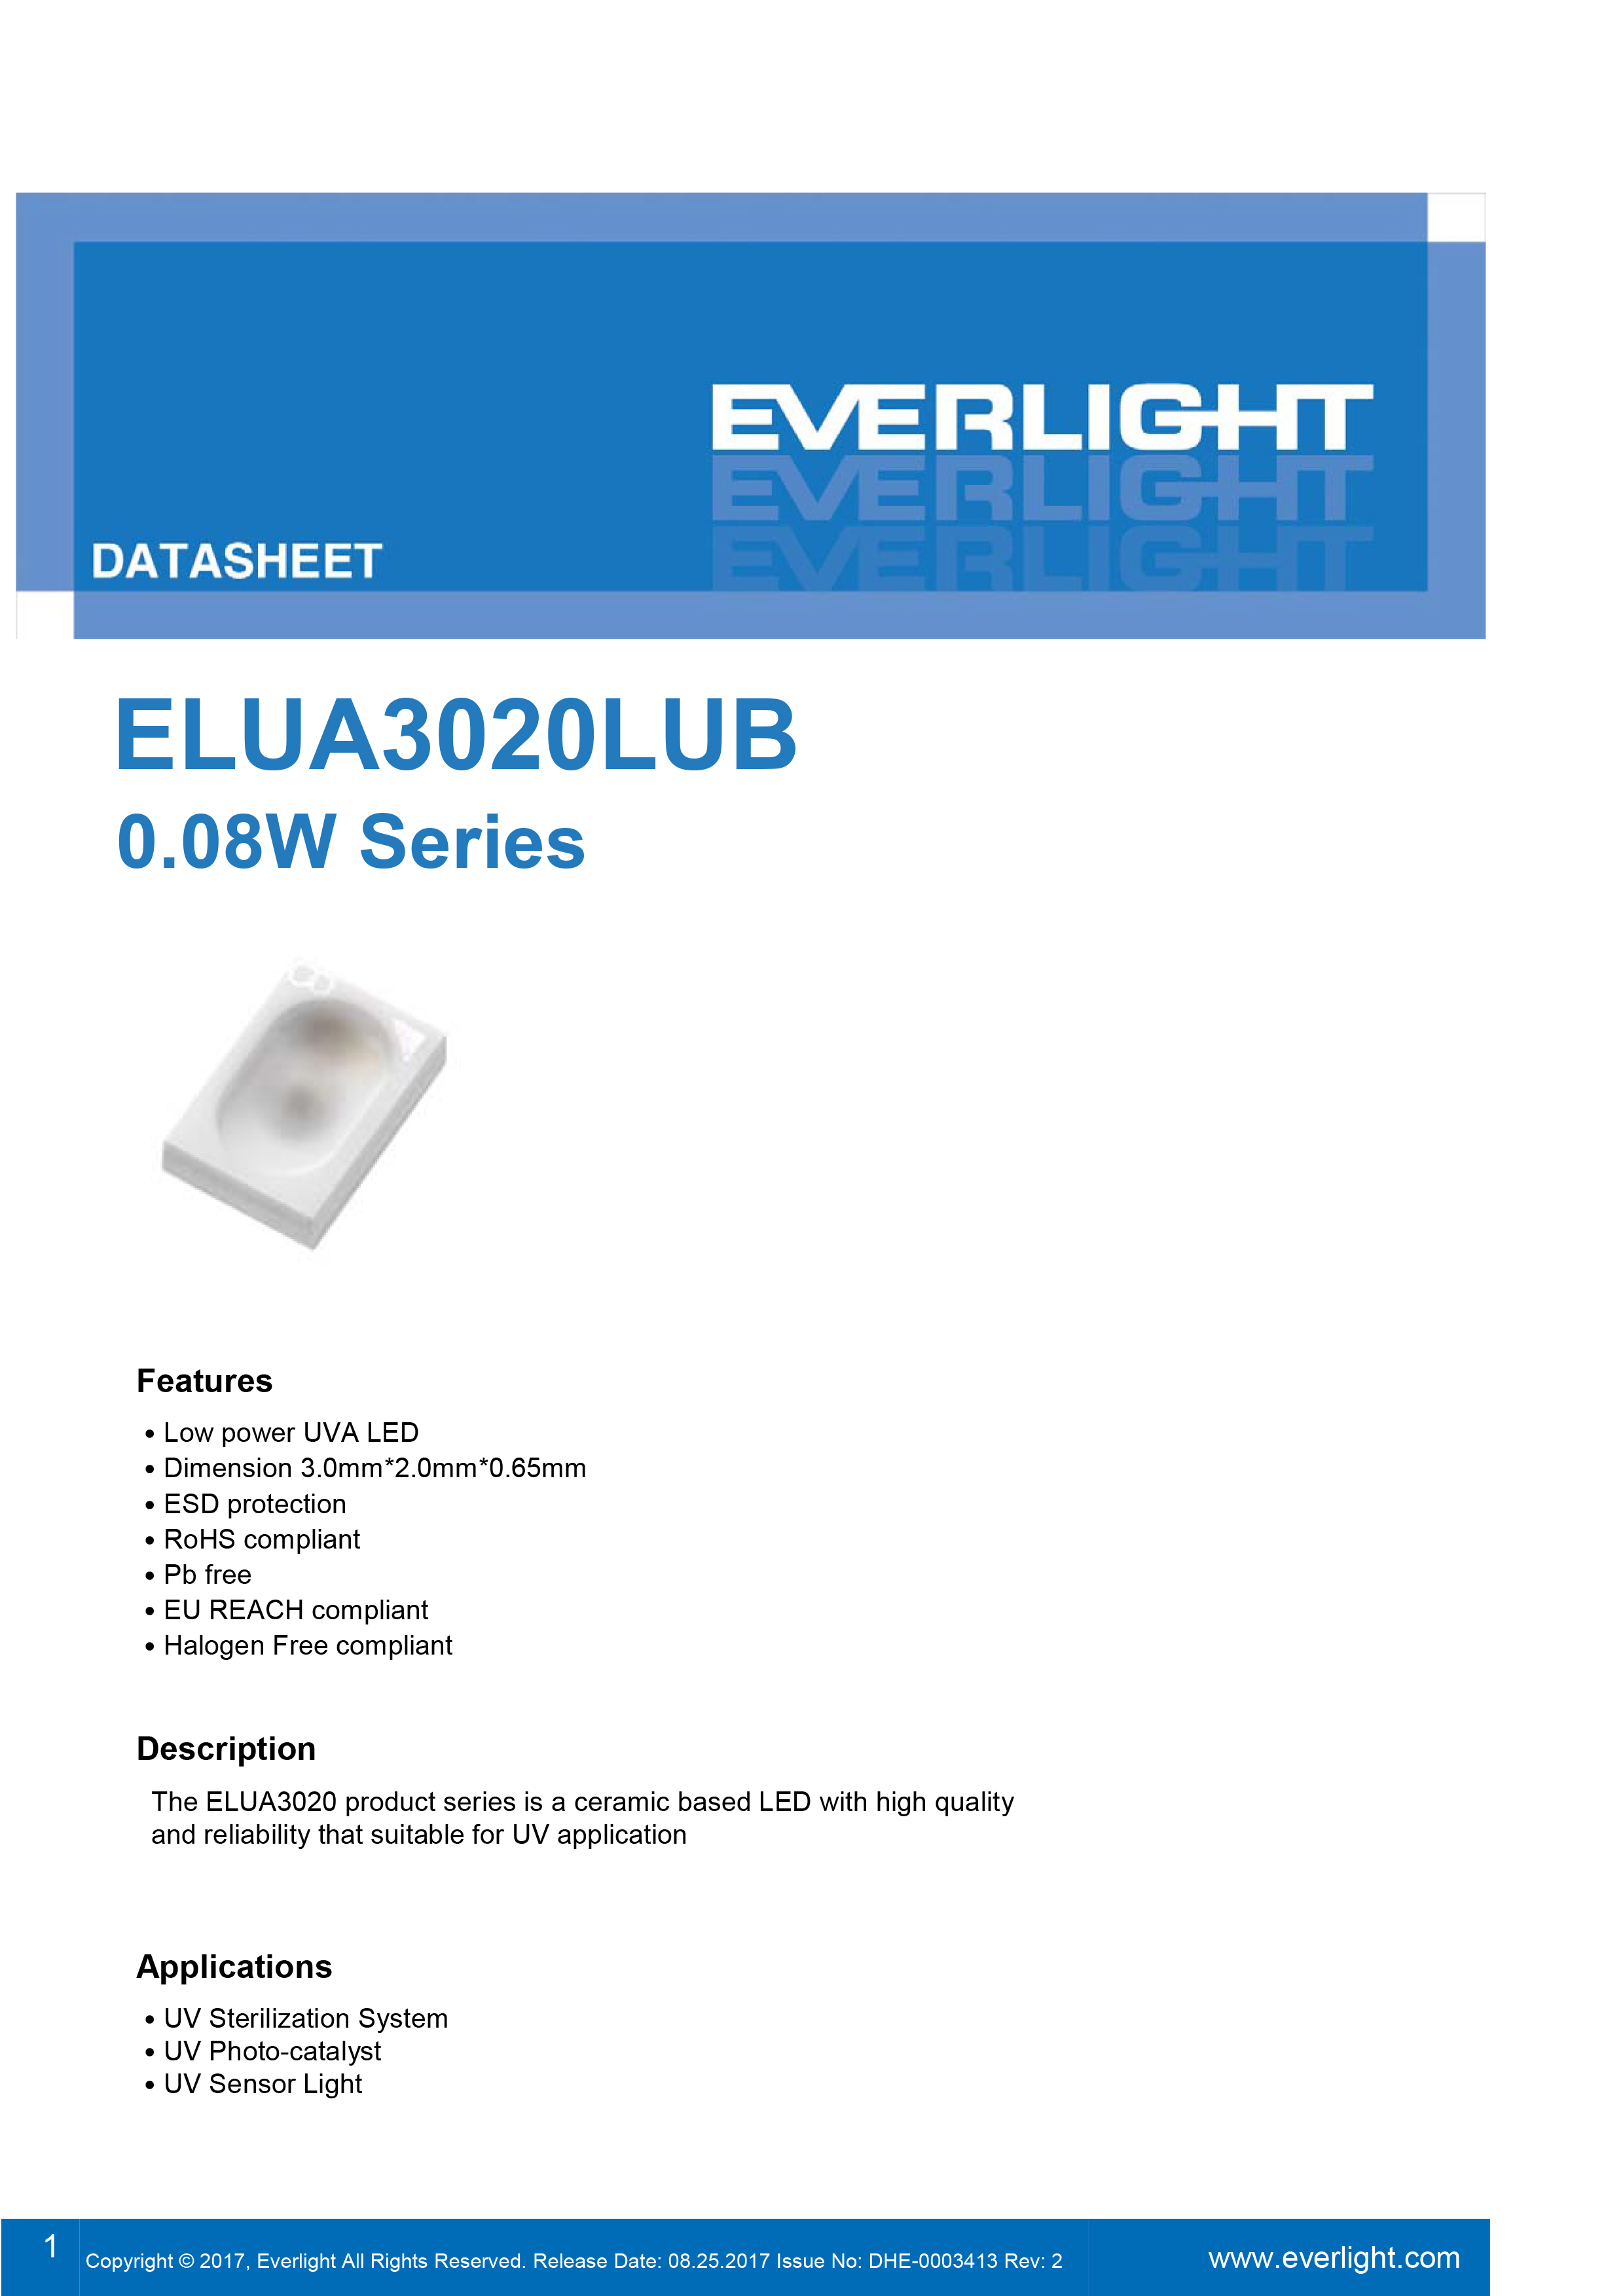 EVERLIGHT SMD 0.08W UV LED ELUA3020LUB-P6070Q43040020-VA1D